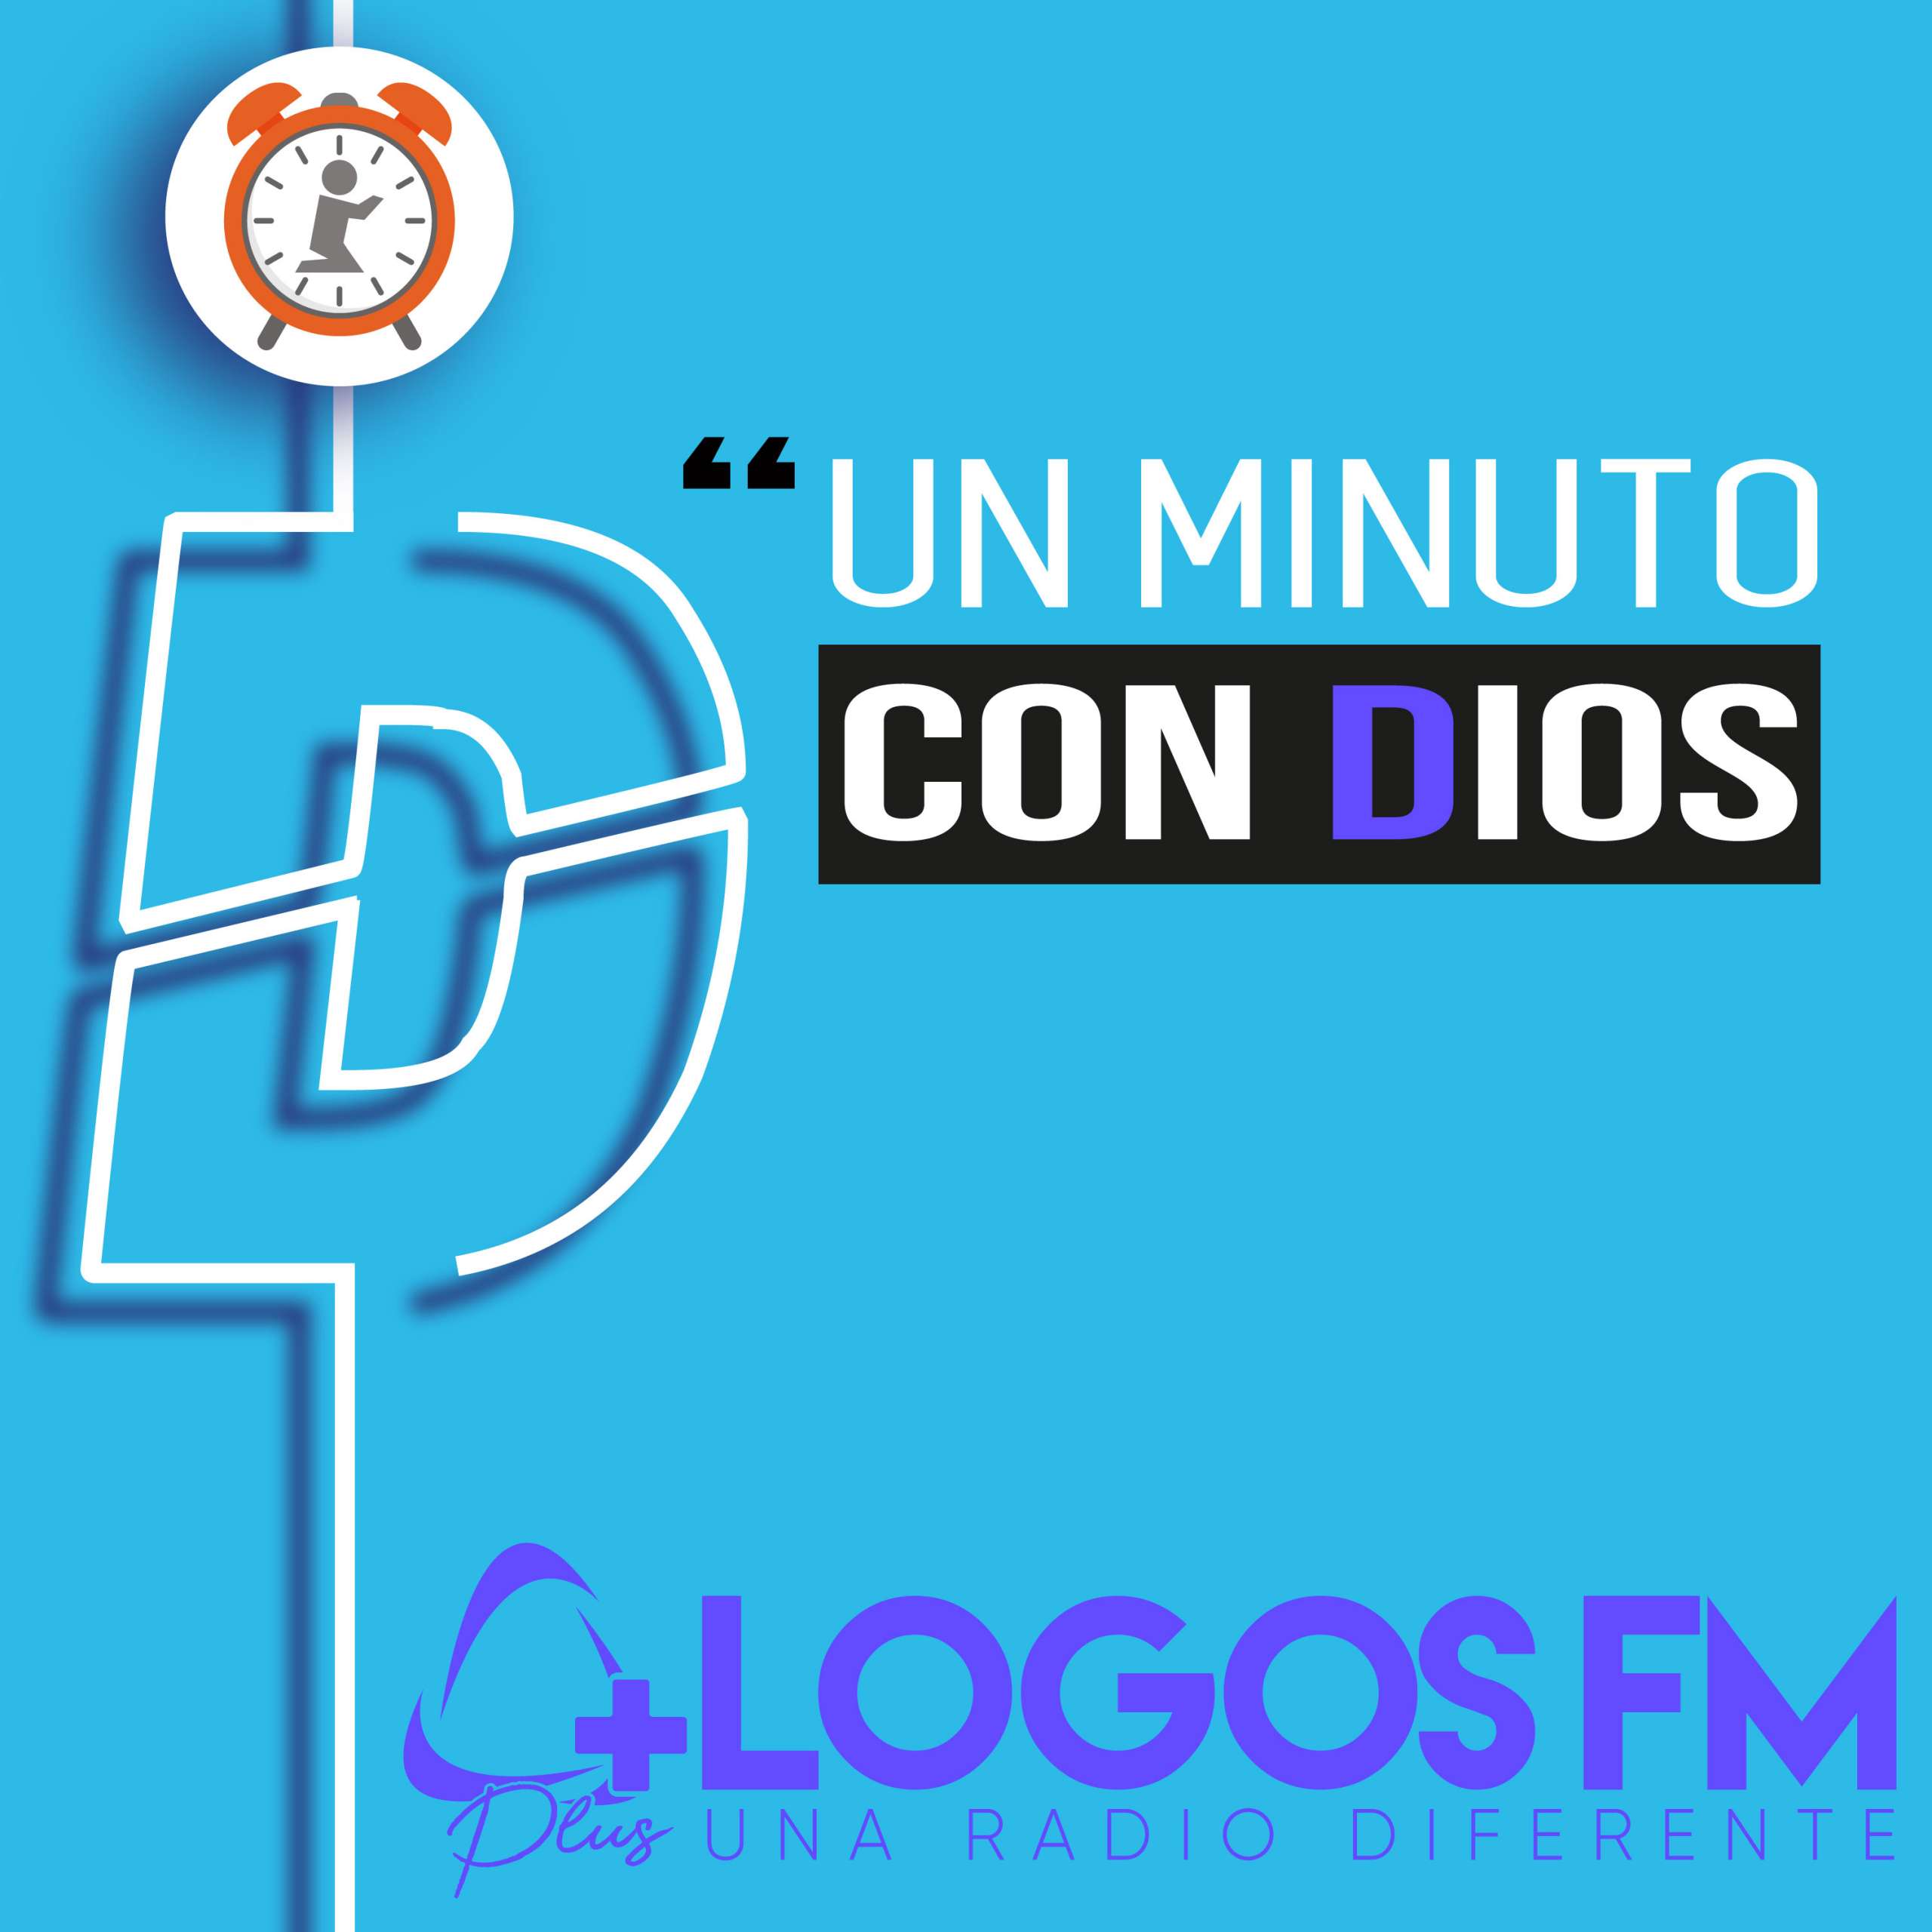 Un minuto con Dios - Episodio 439 - Loida Vargas